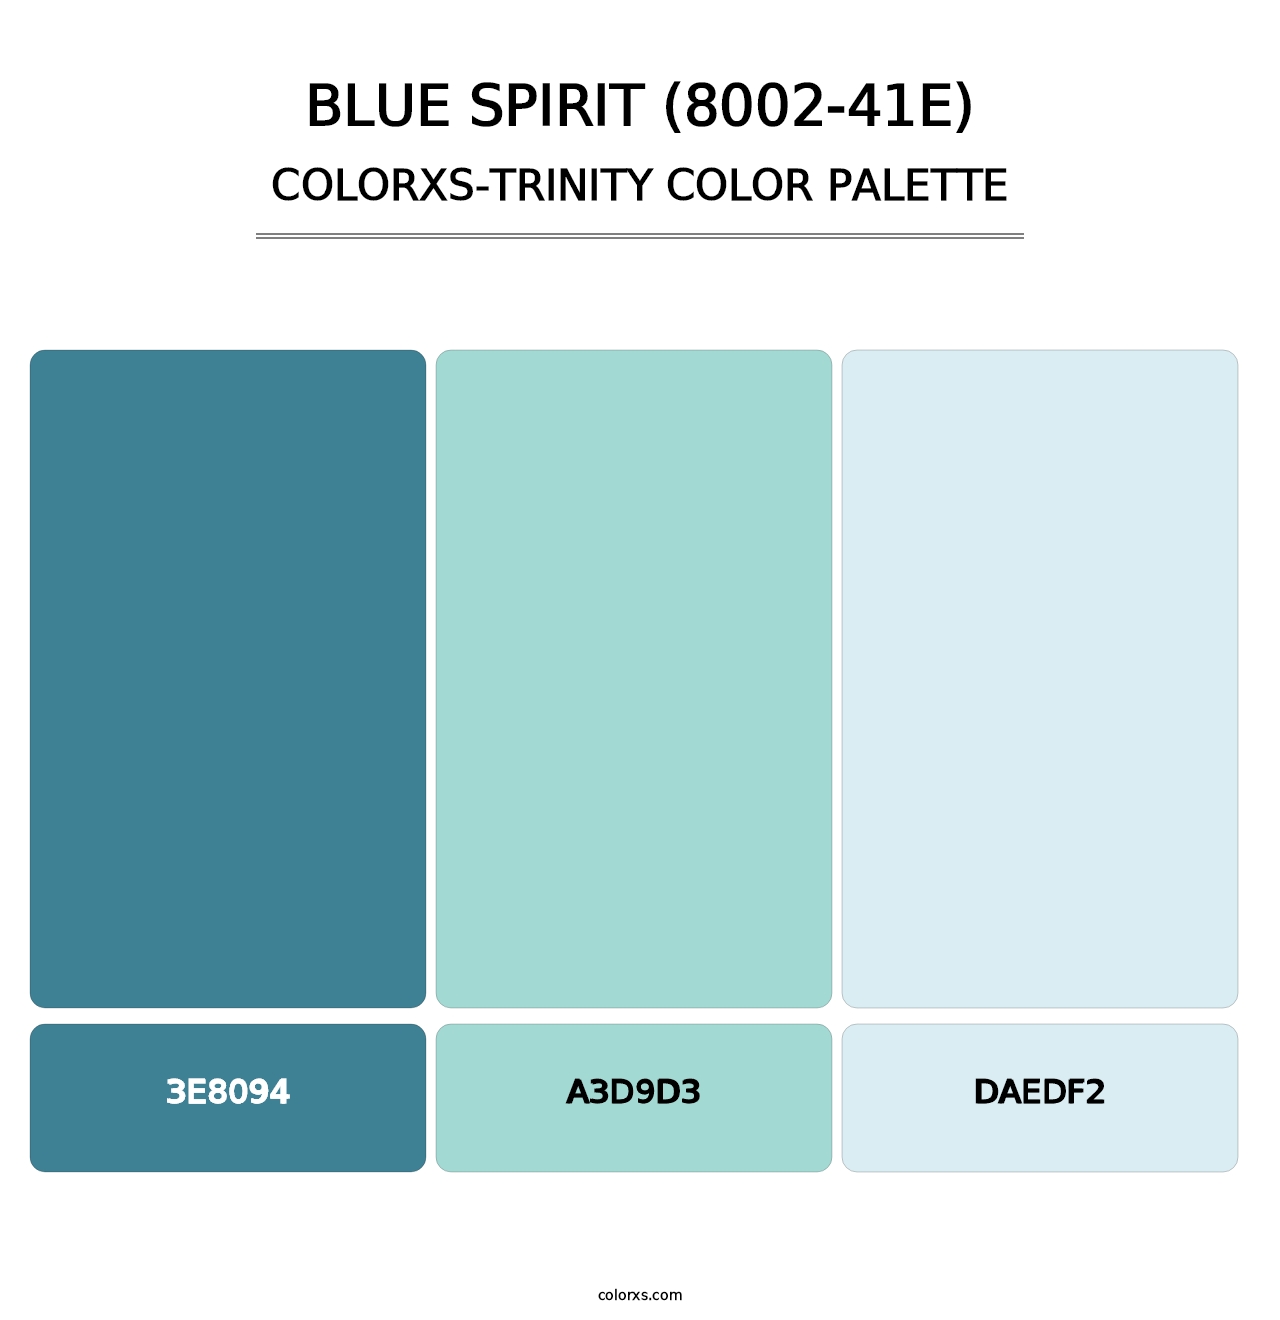 Blue Spirit (8002-41E) - Colorxs Trinity Palette